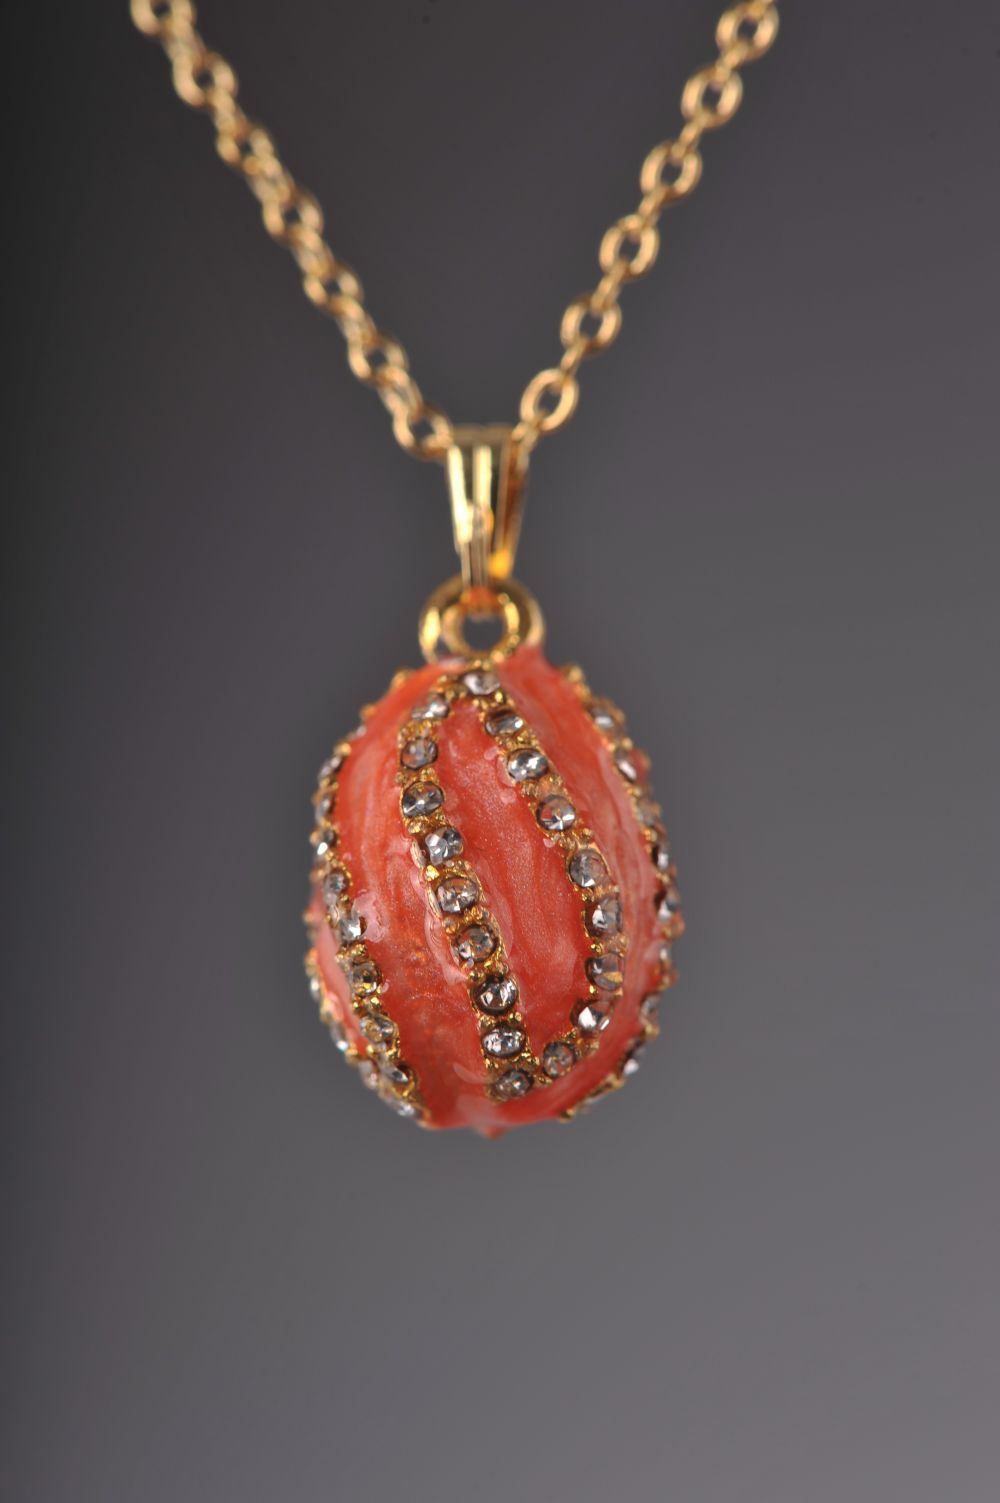 Keren Kopal Salmon Spiral Egg Pendant Necklace jewelry 37.00